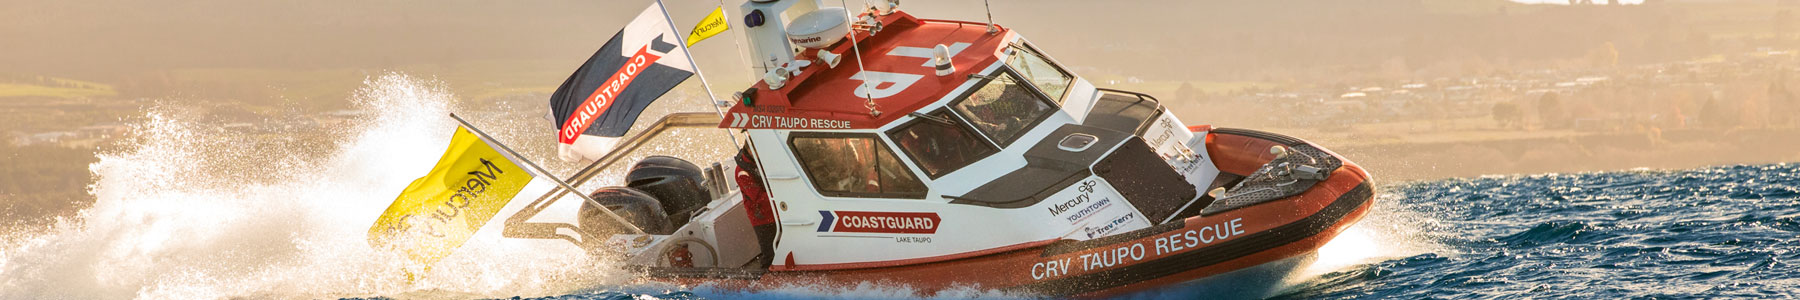 /i/Images/headers/Cat_CoastguardTaupo_3.jpg